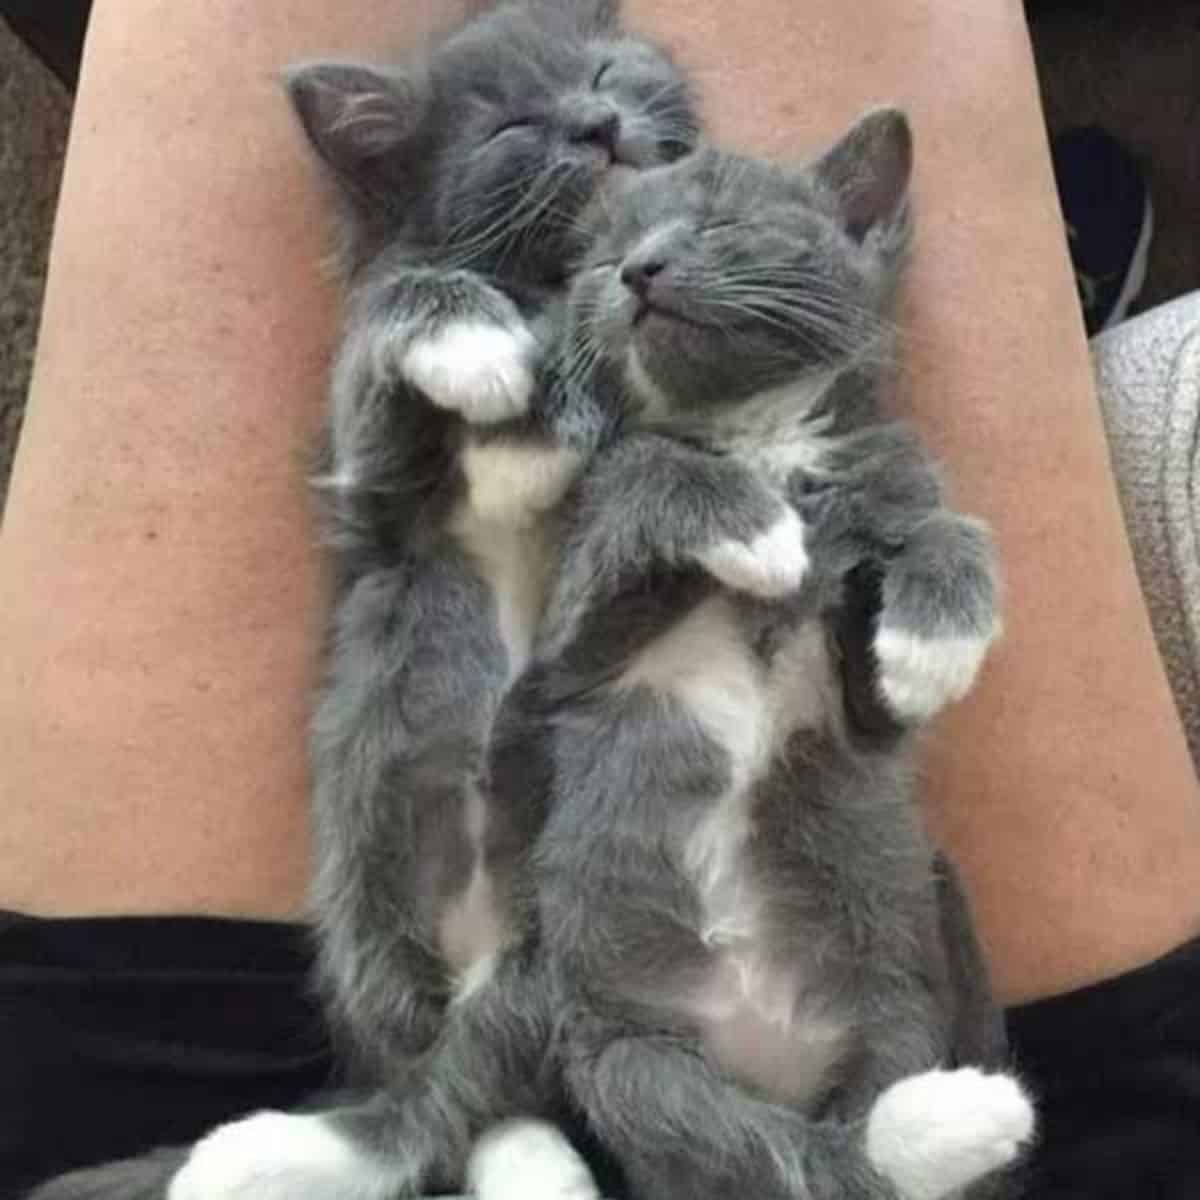 Kittens cuddling and sleeping peacefully